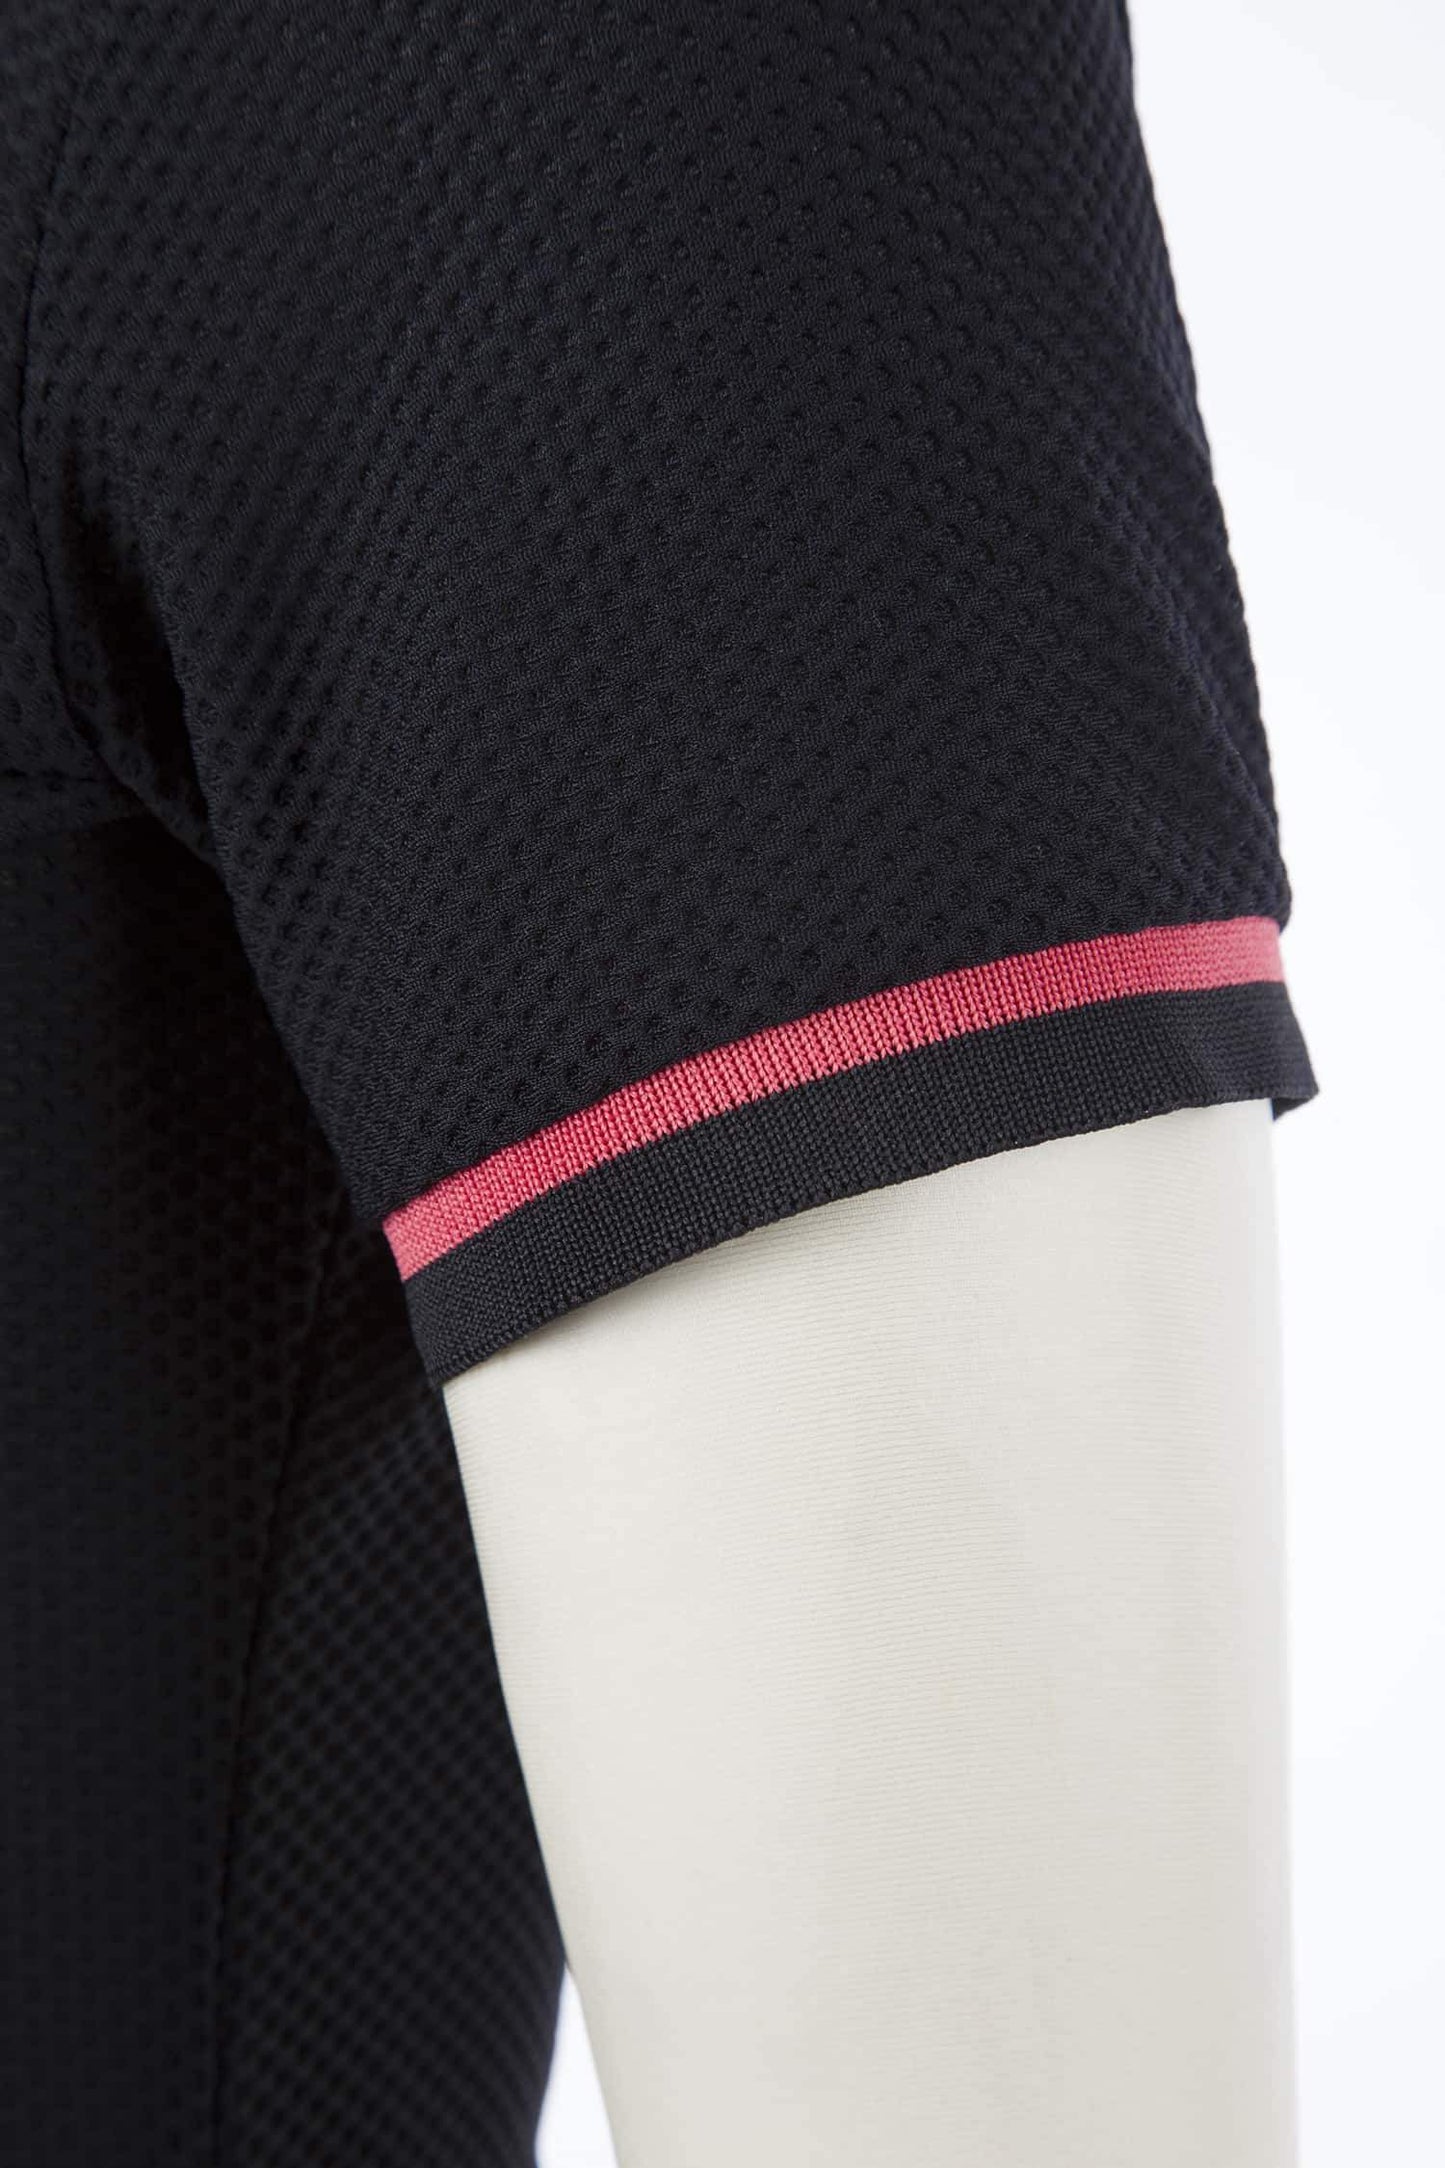 Animo Brevius shirt Short Sleeve Black/Pink